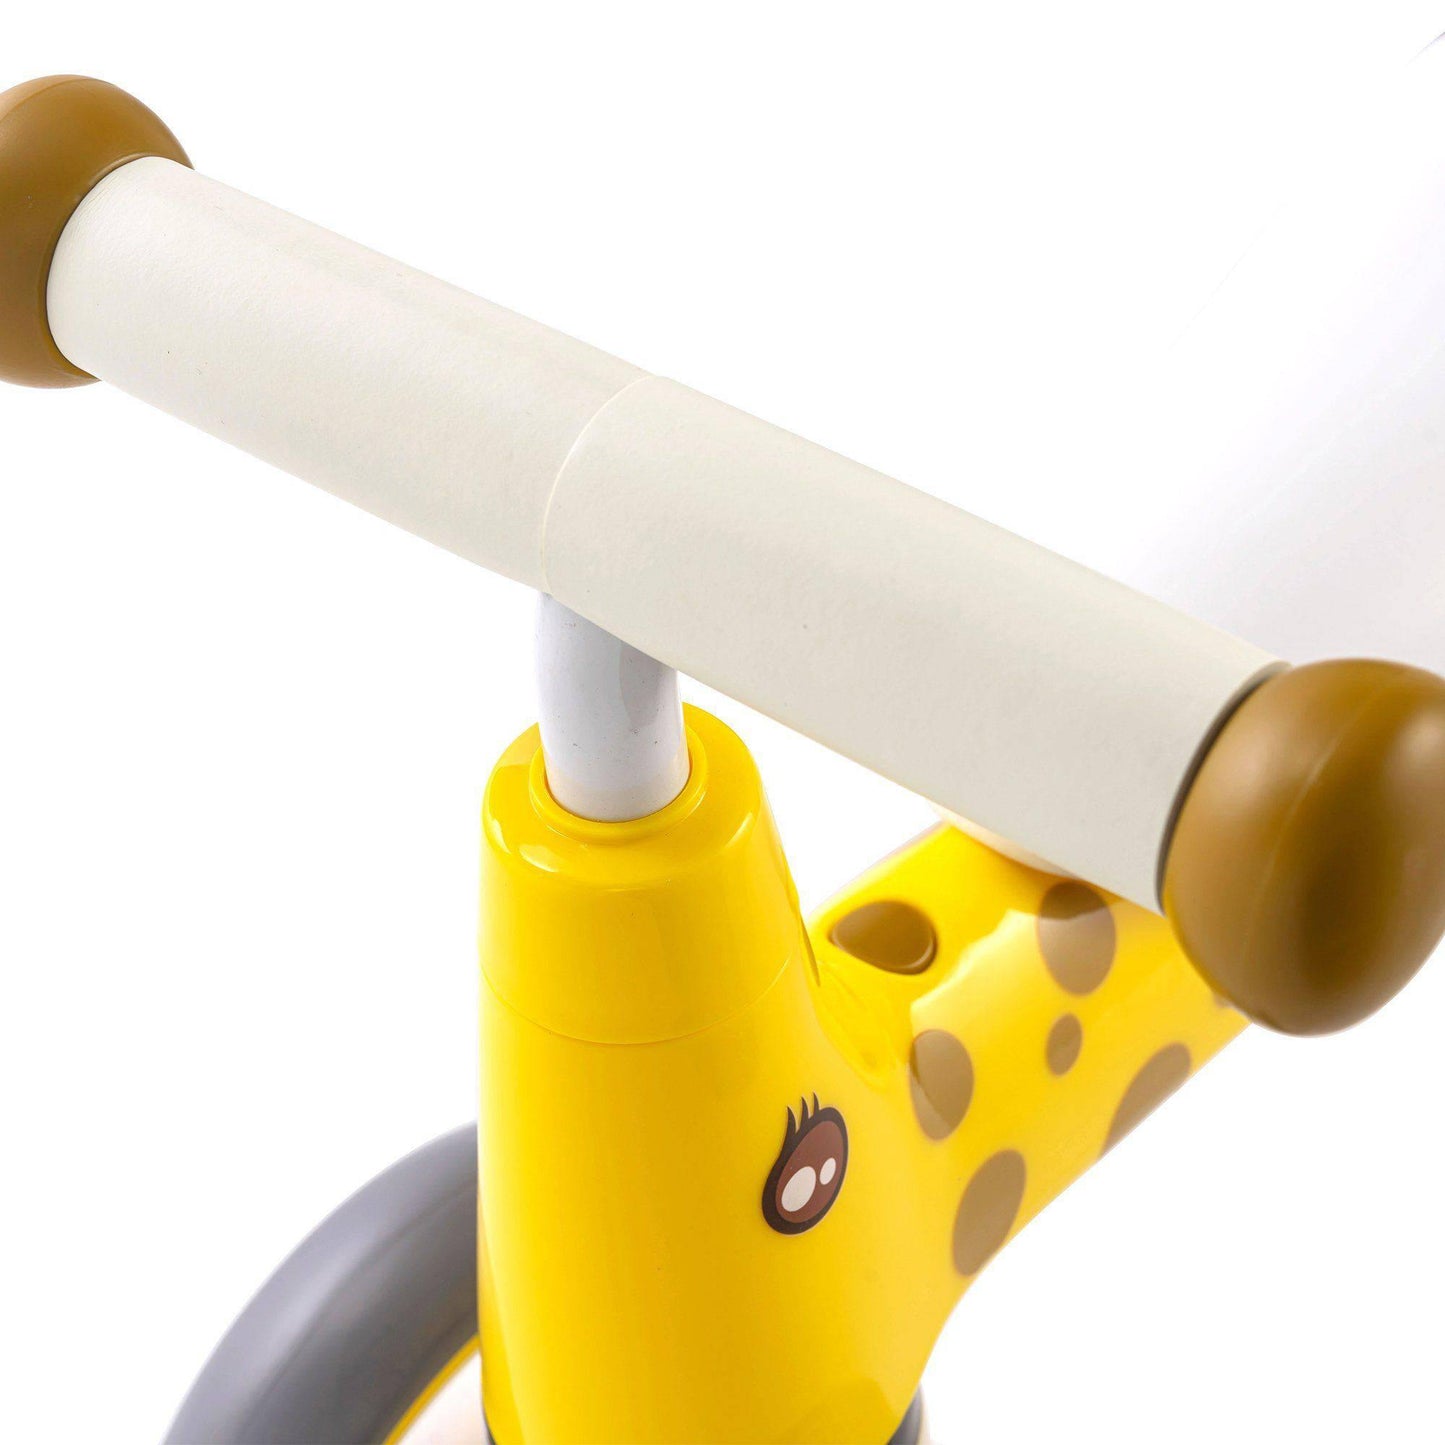 Freddo Toys 3 Wheel Balance Bike